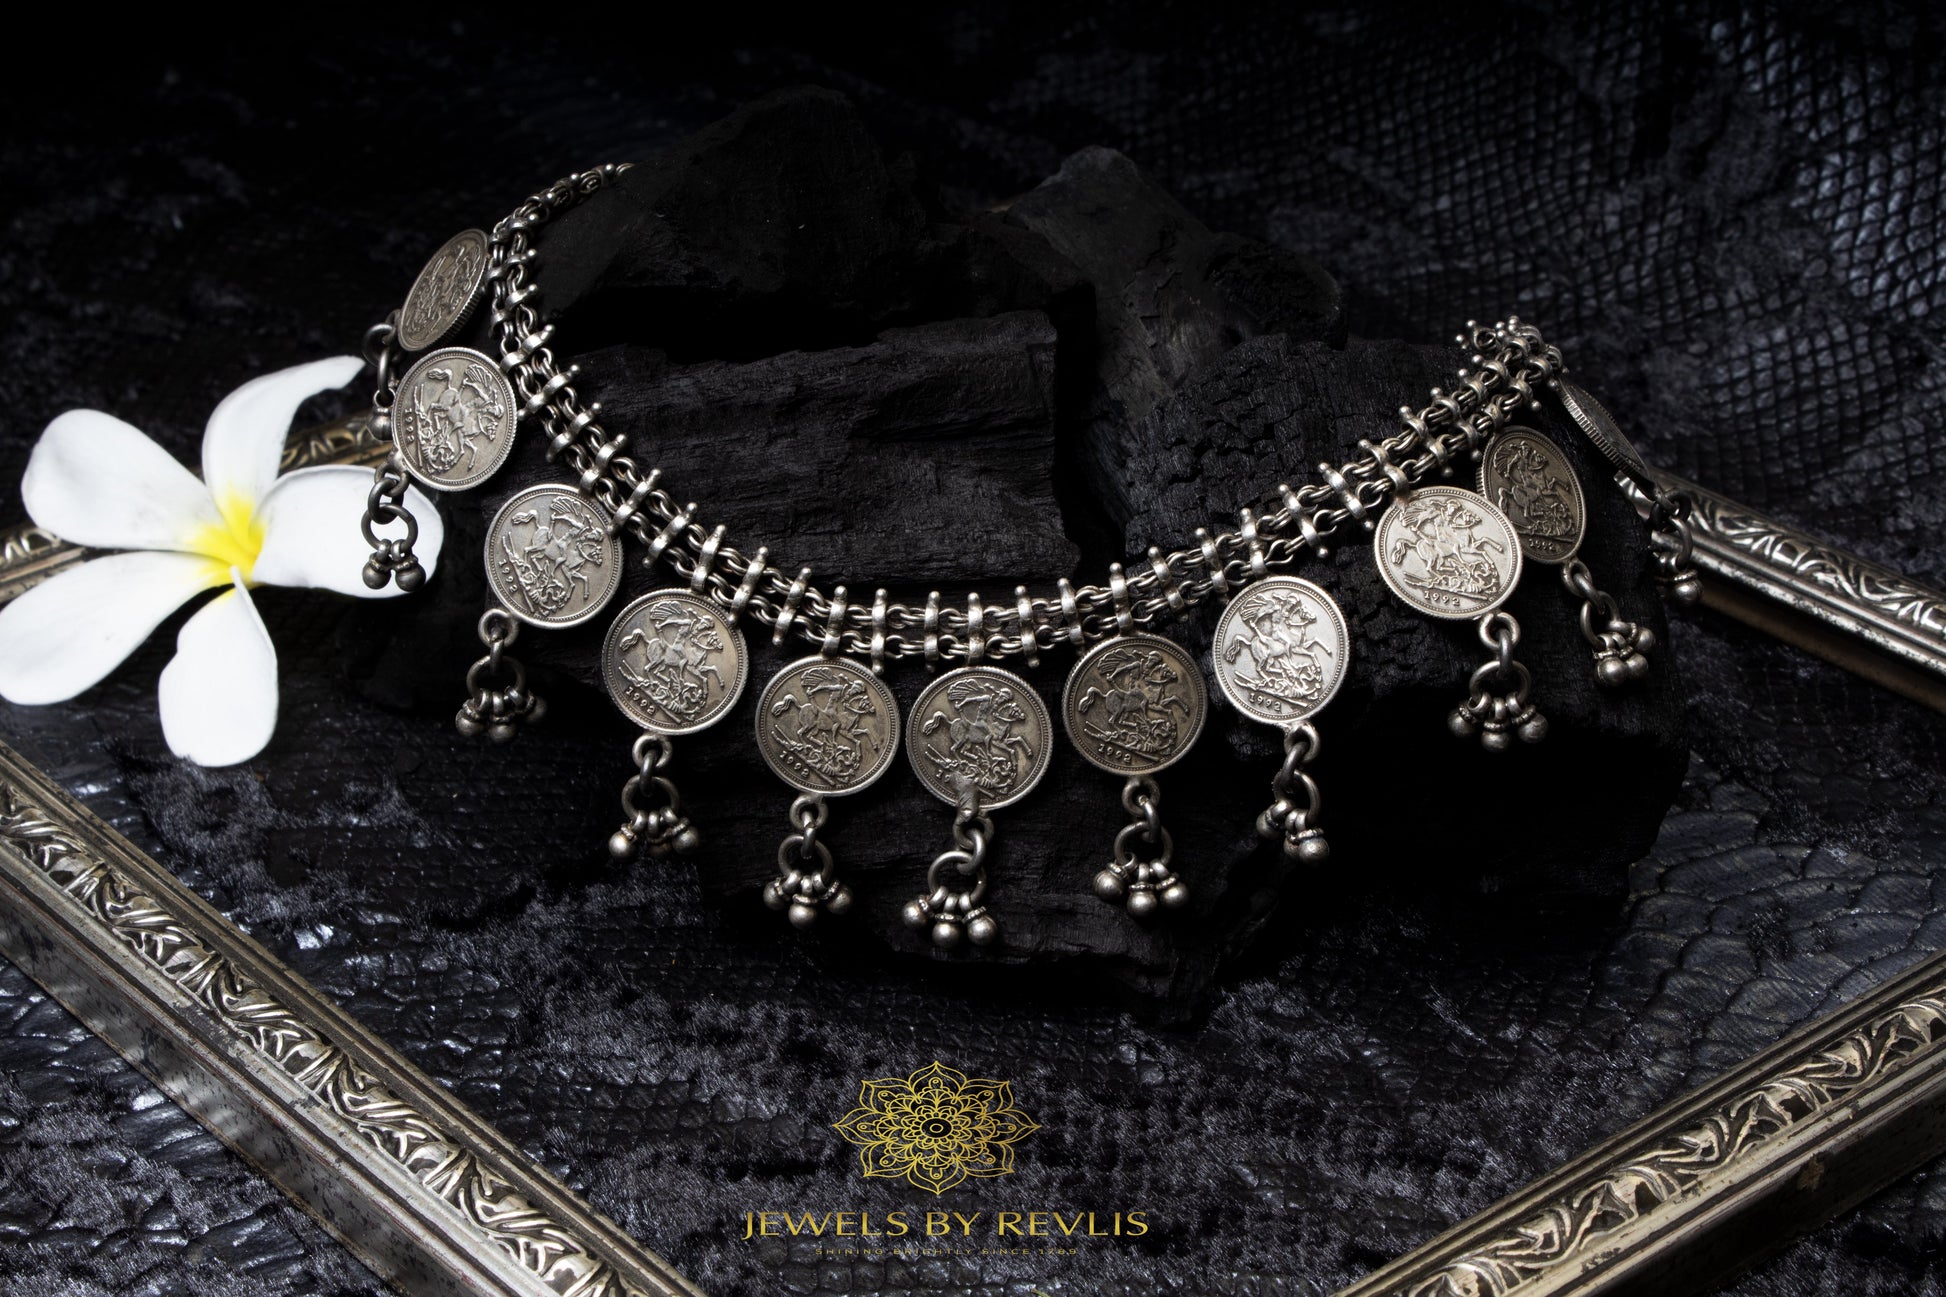 Jewels by Revlis Silver Neckpiece, pendants and necklaces